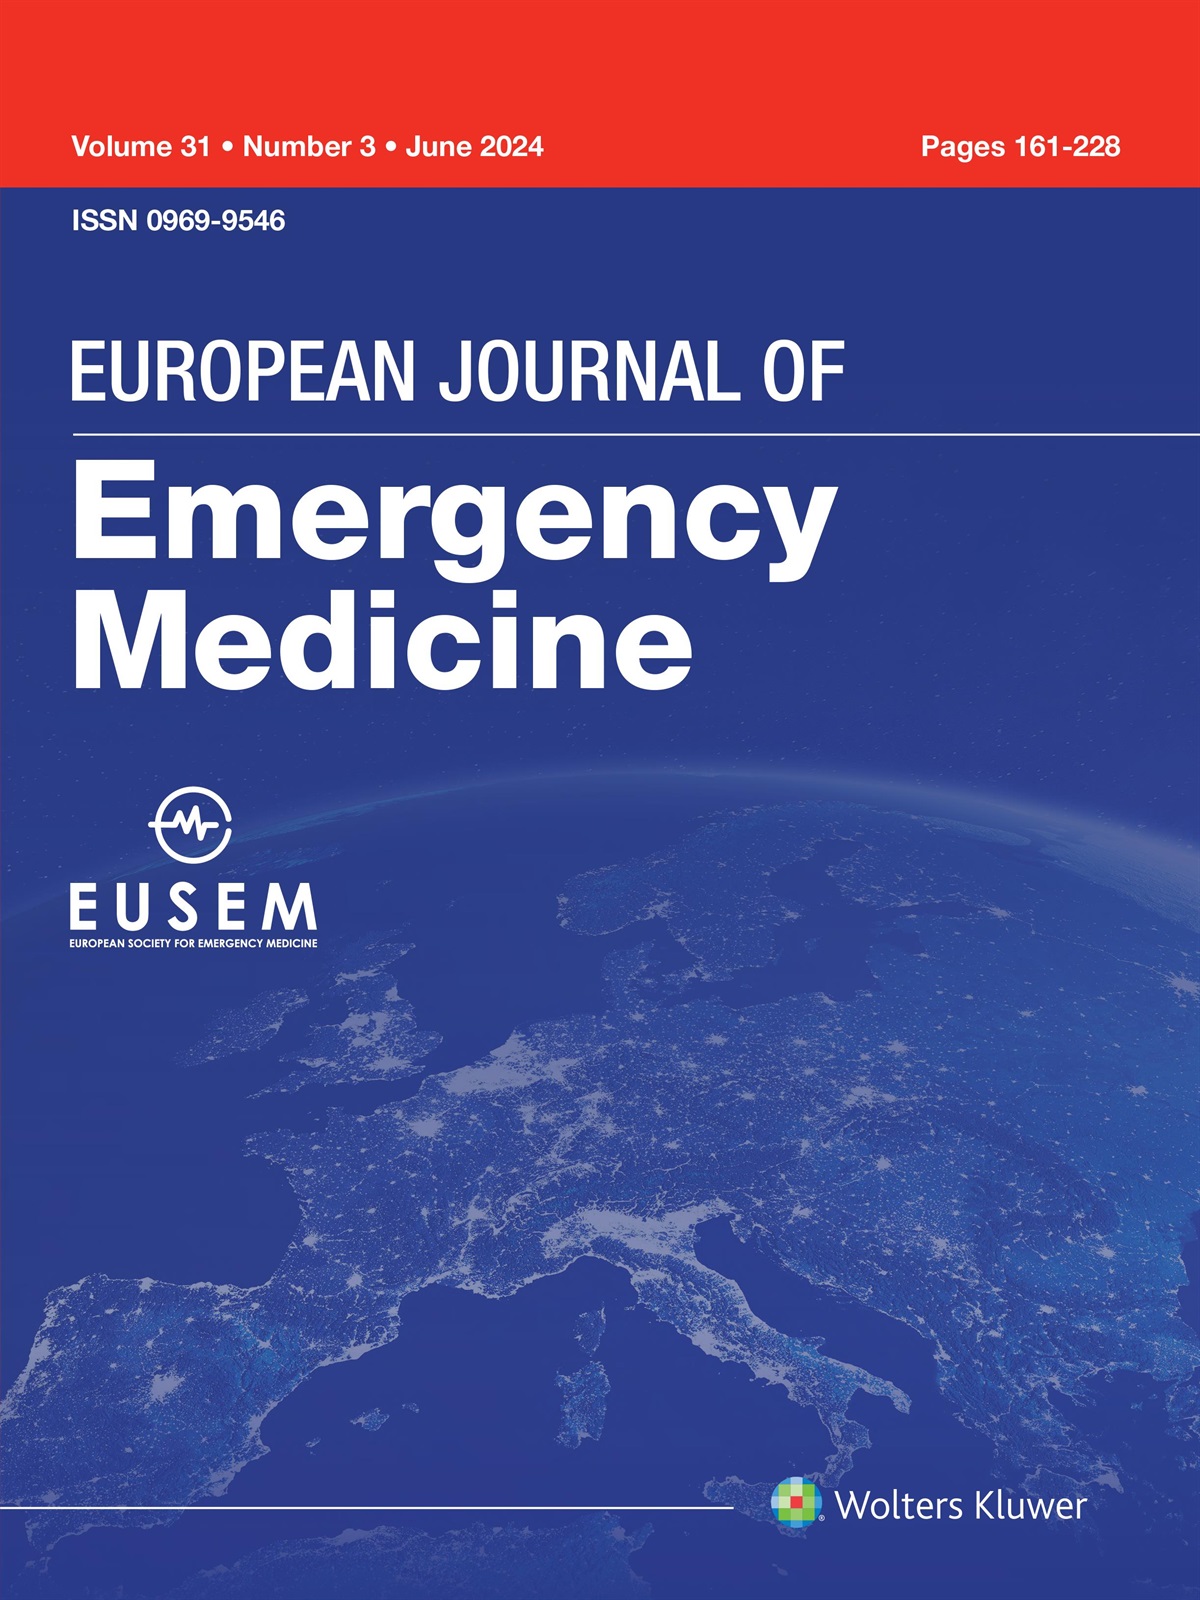 Pulmonary embolism: pitfalls, unmet needs, and perspectives in emergency medicine